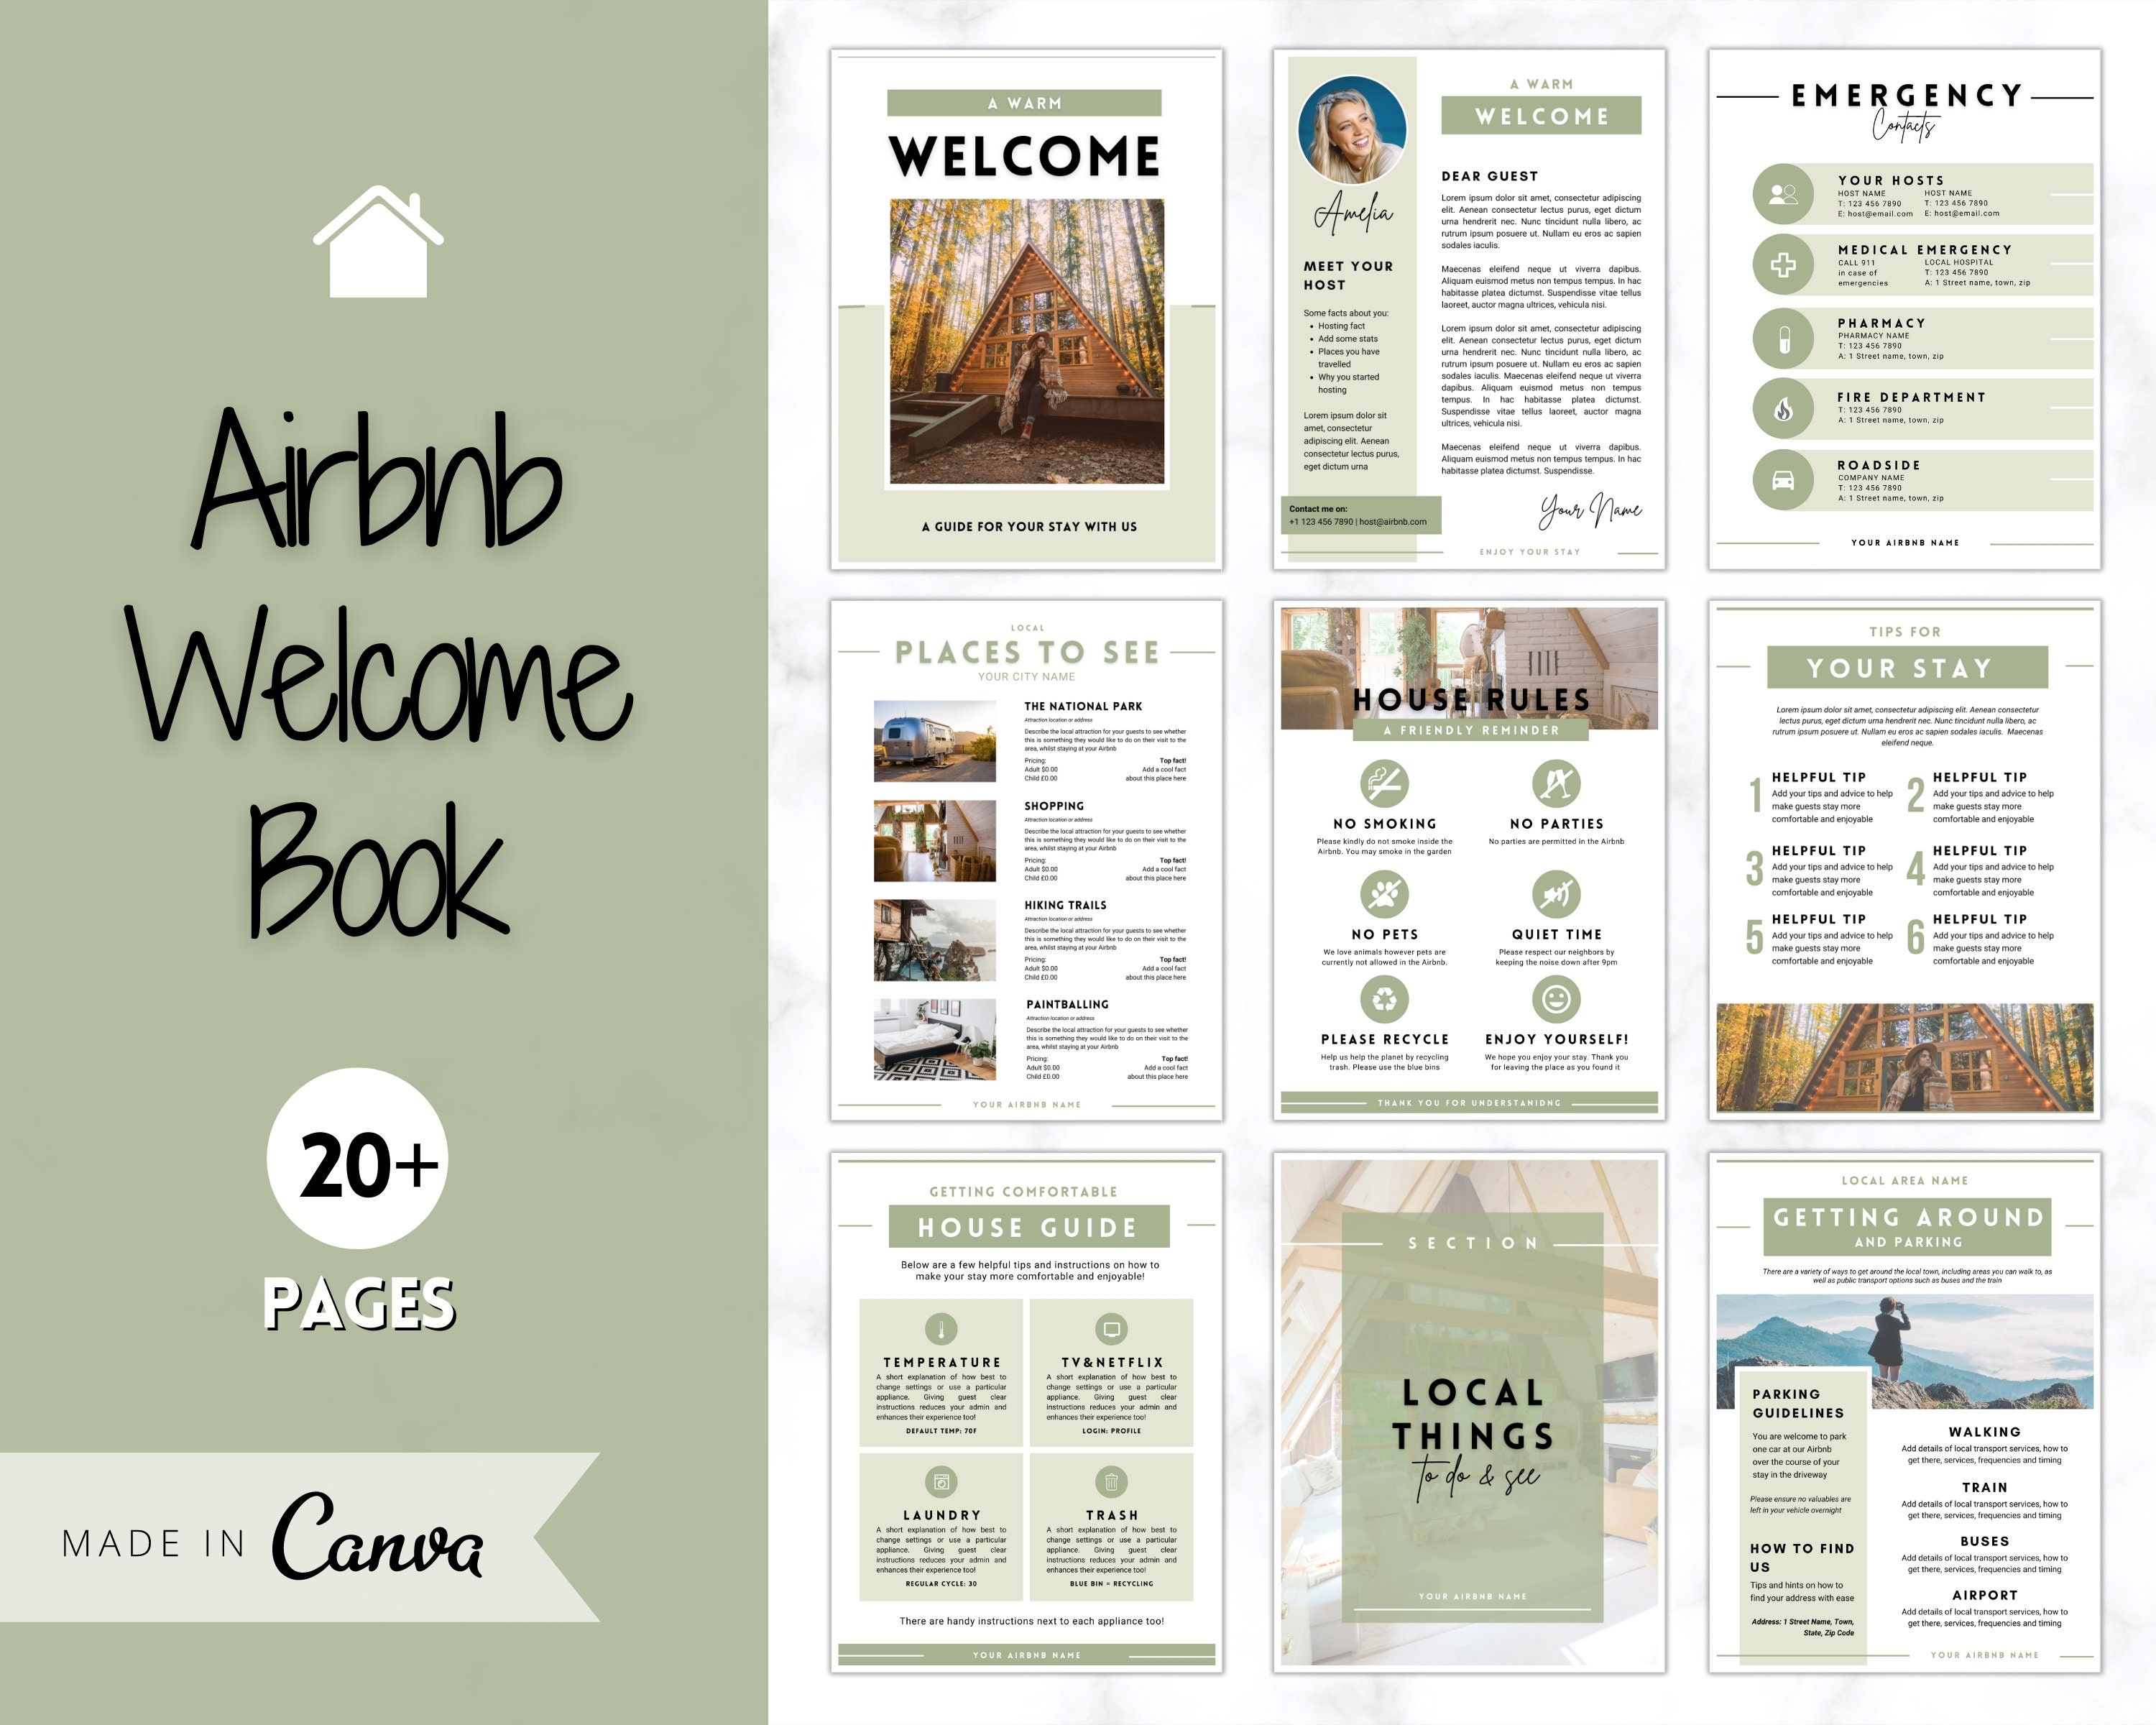 Beach House Airbnb Book Template, Editable Canva Guide